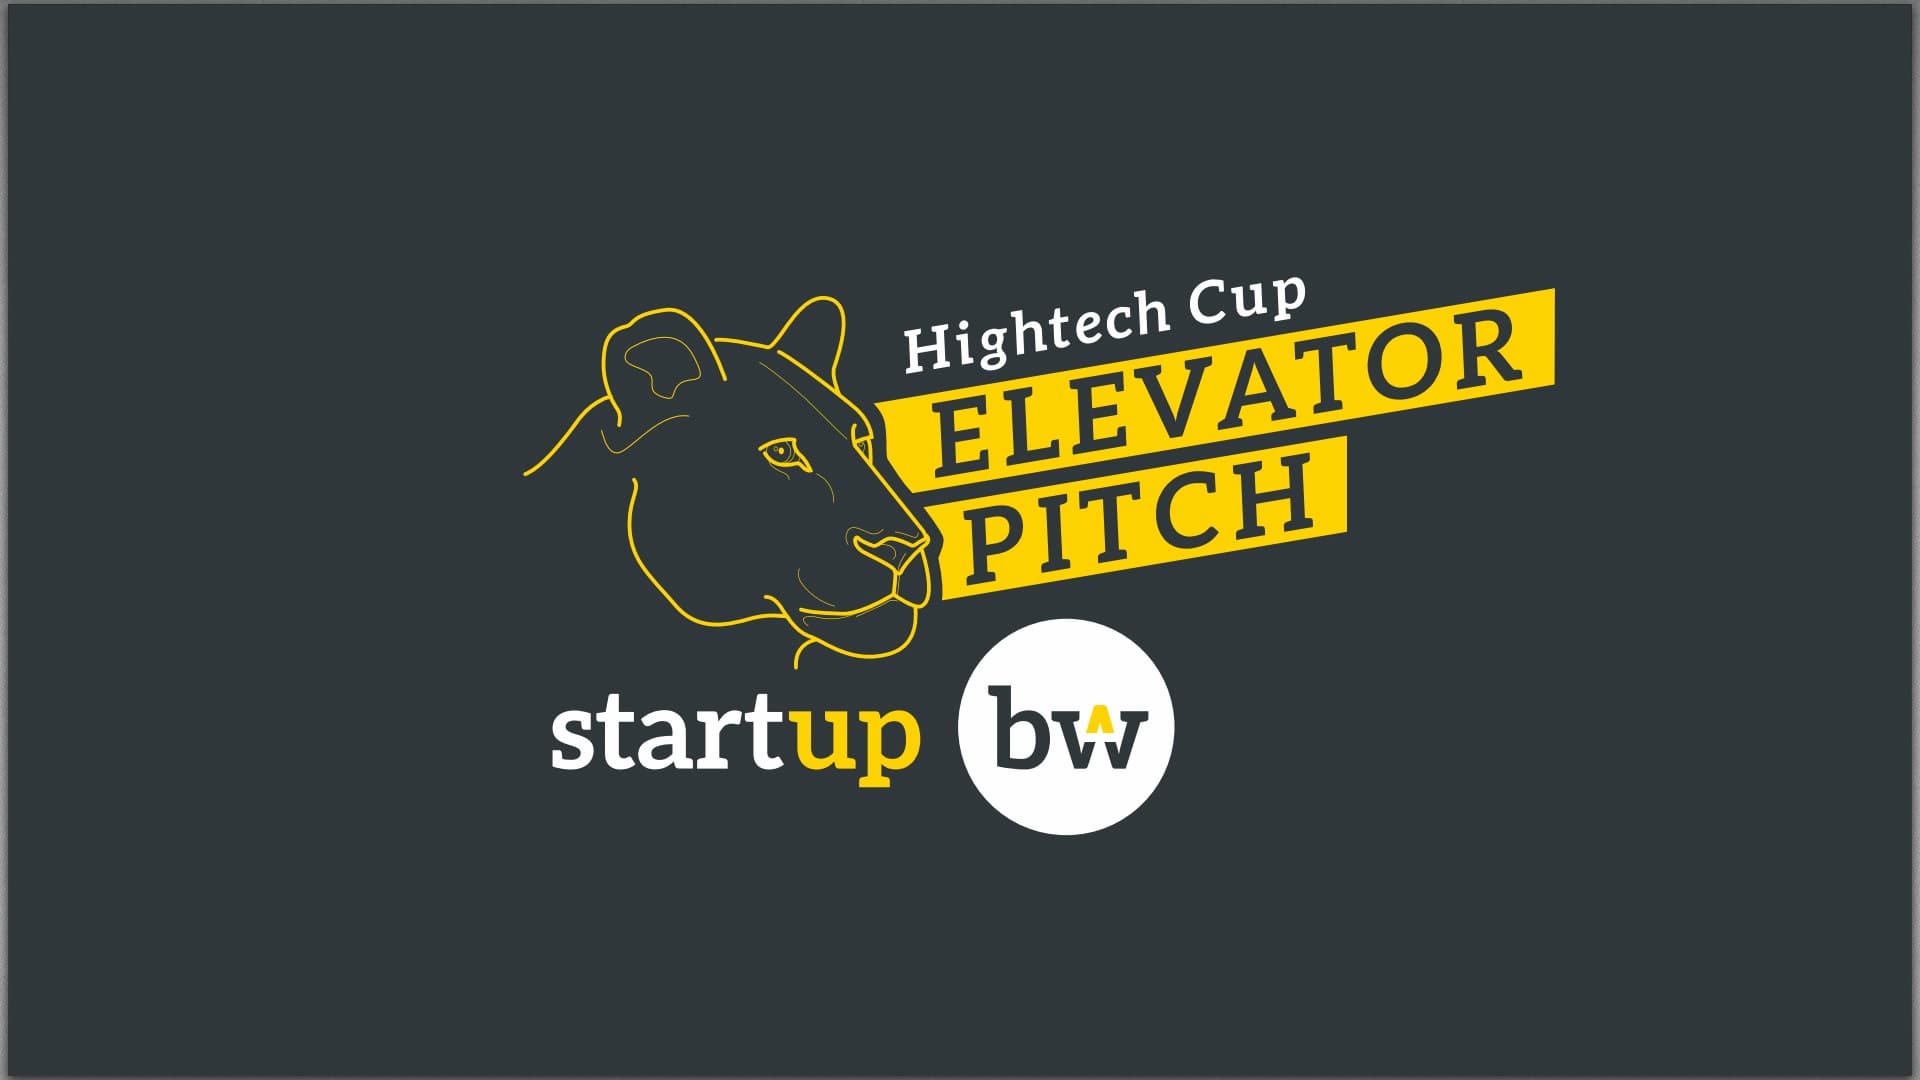 Logo Start-up BW Hightech Cup Elevator Pitch